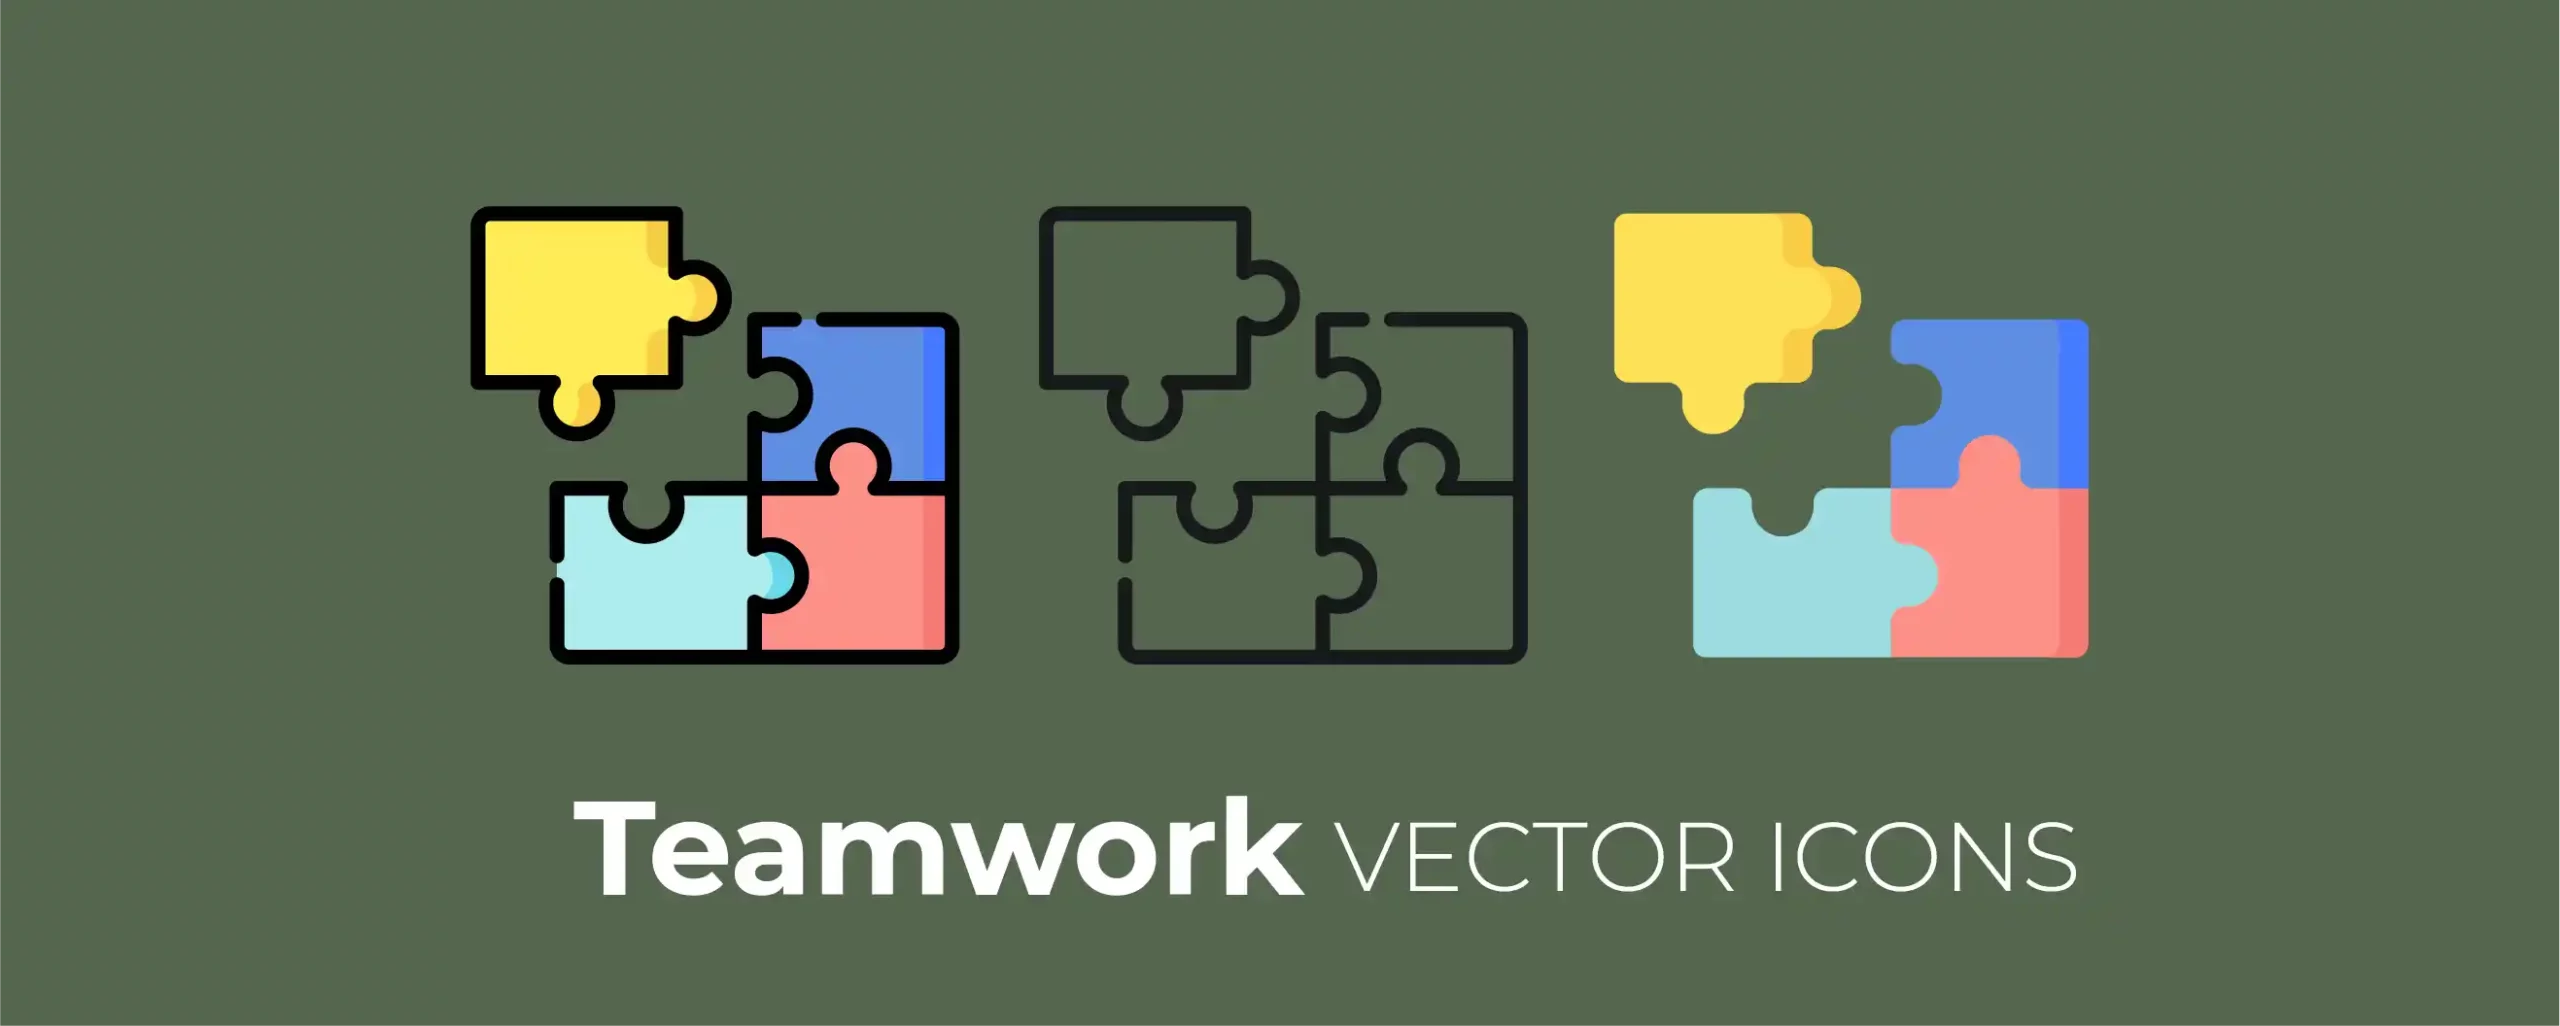 Teamwork free vector icons